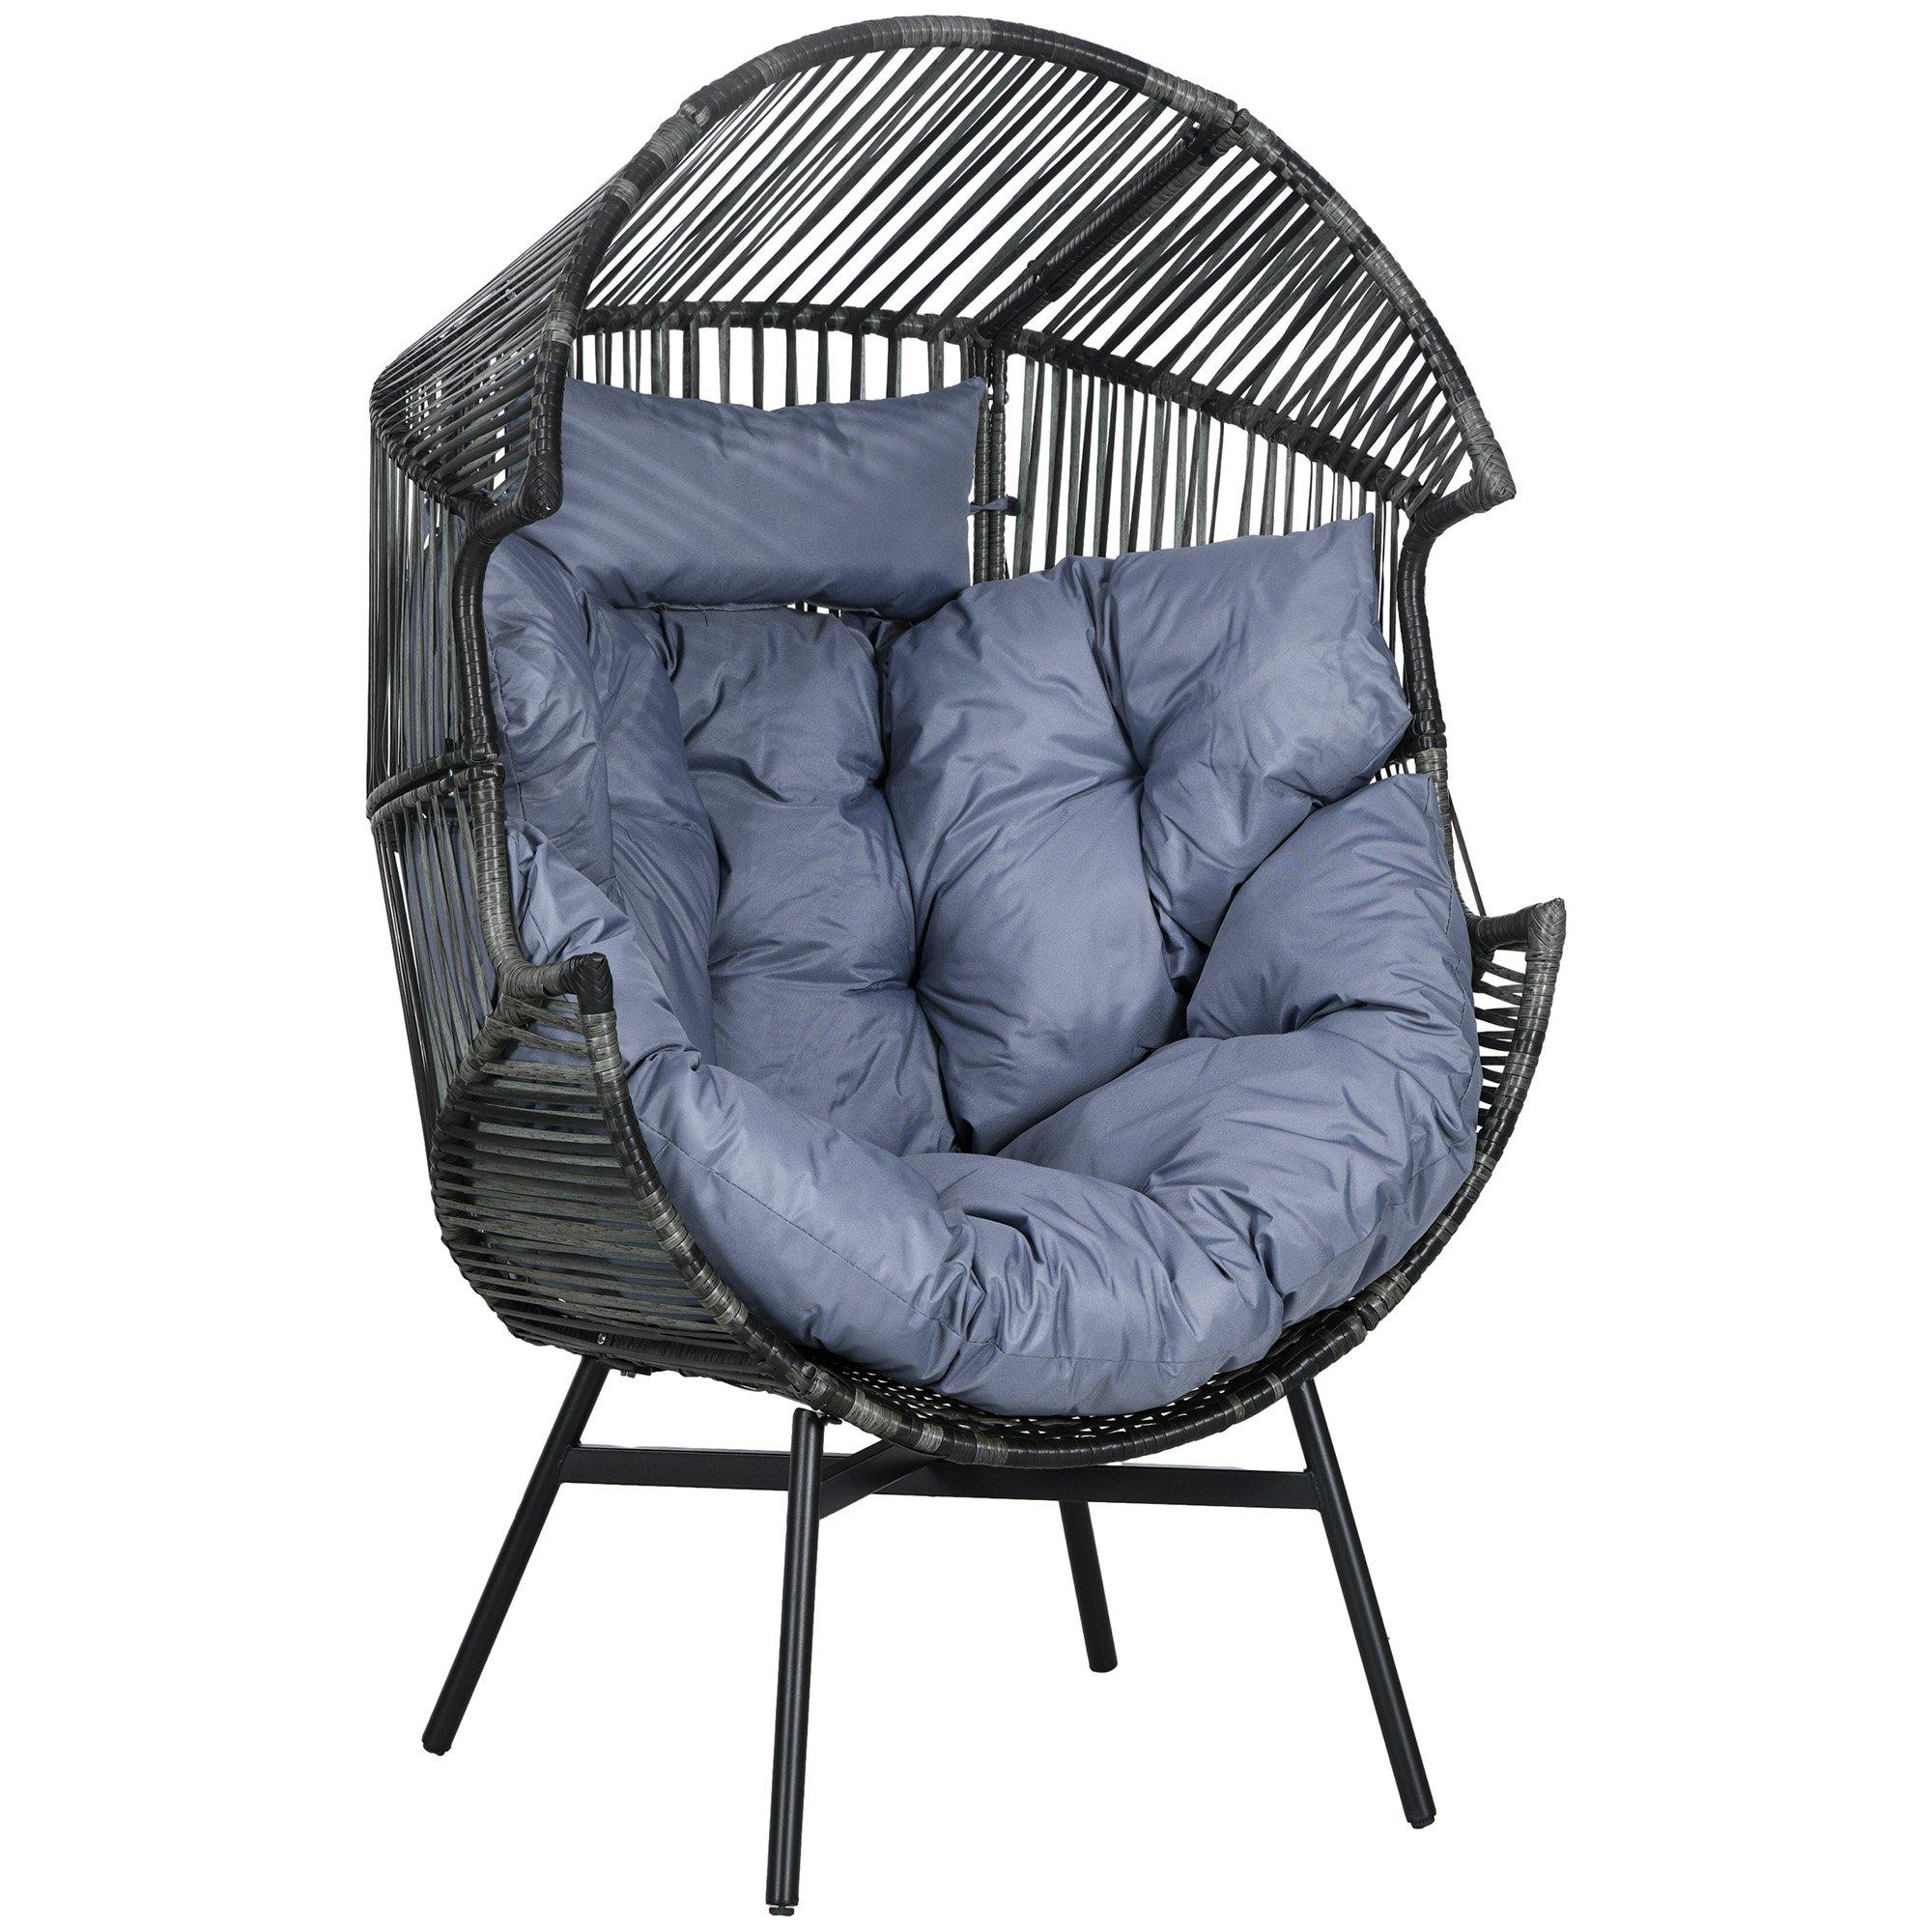 Rattan Leisure Chair w/ Cushion, Garden Egg Chair with Headrest, Grey